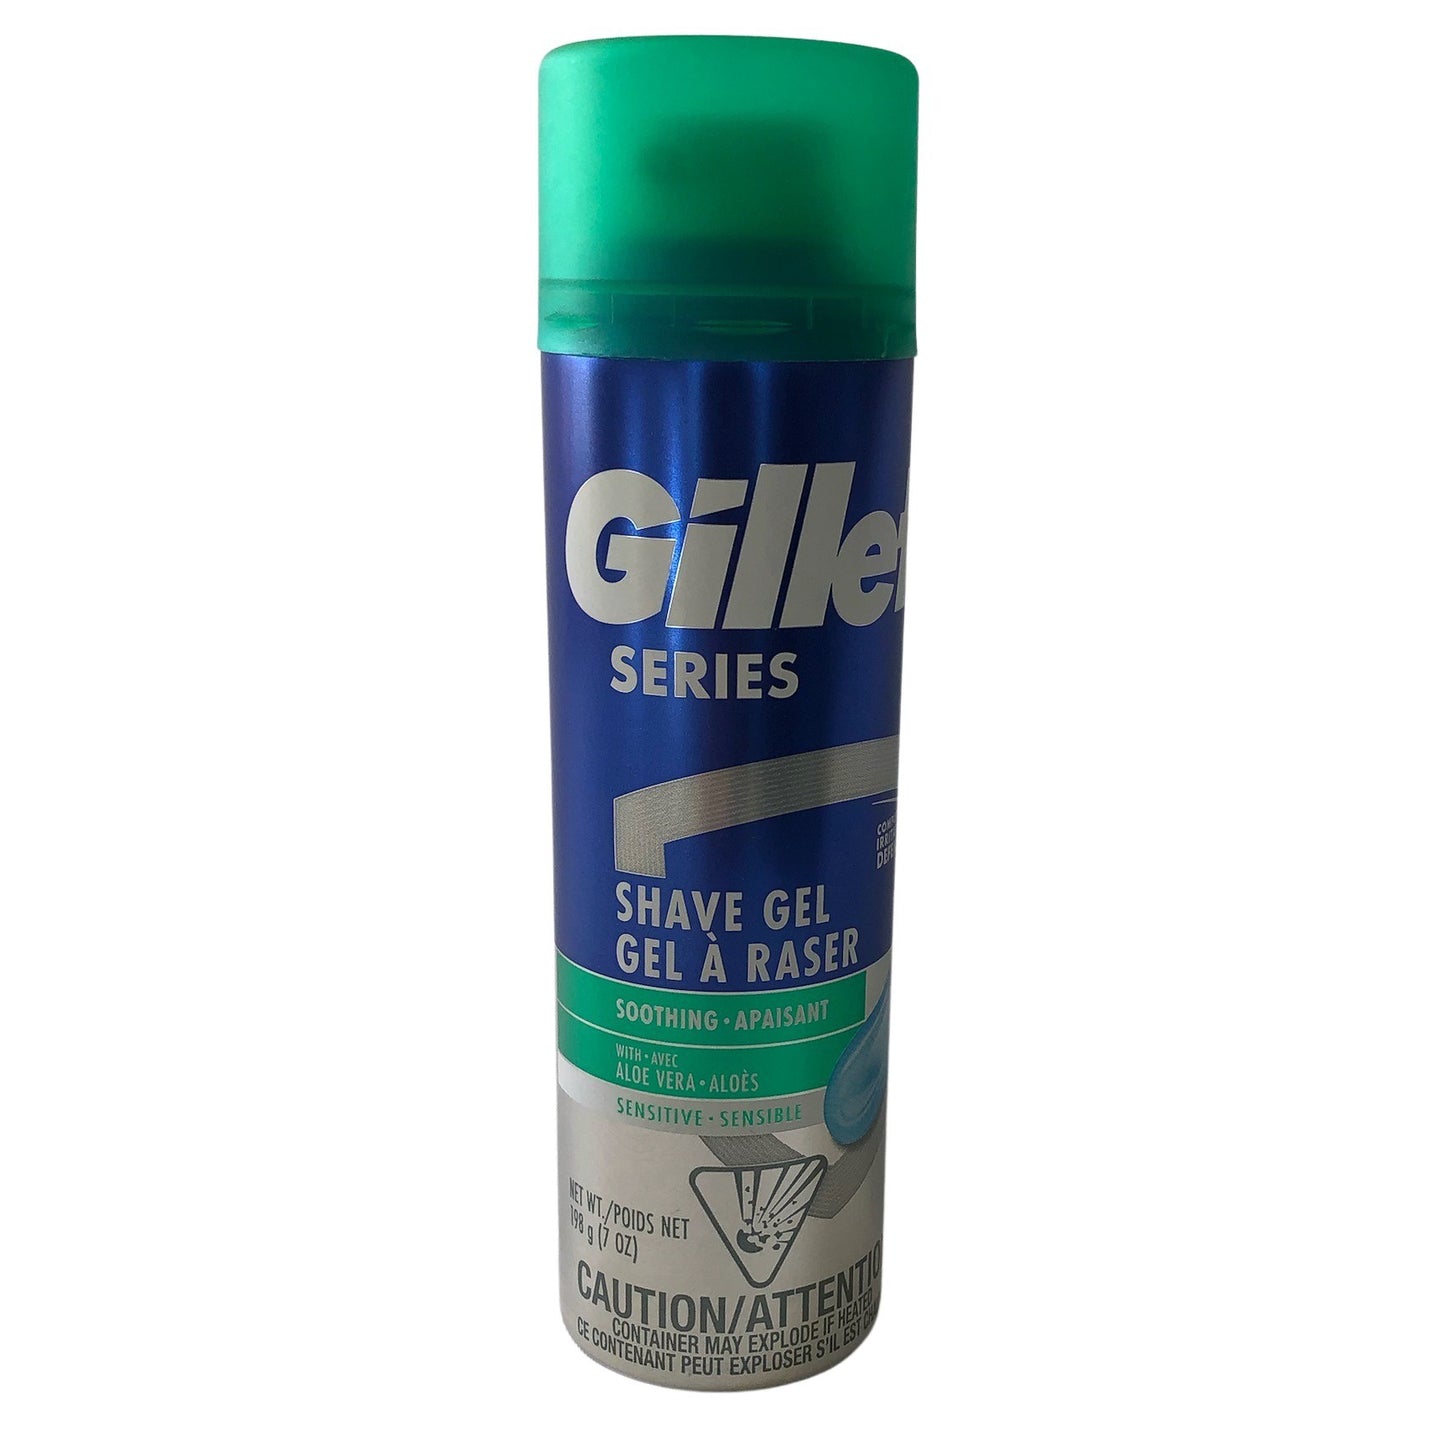 Gillette Series Shave Gel 198g soothing